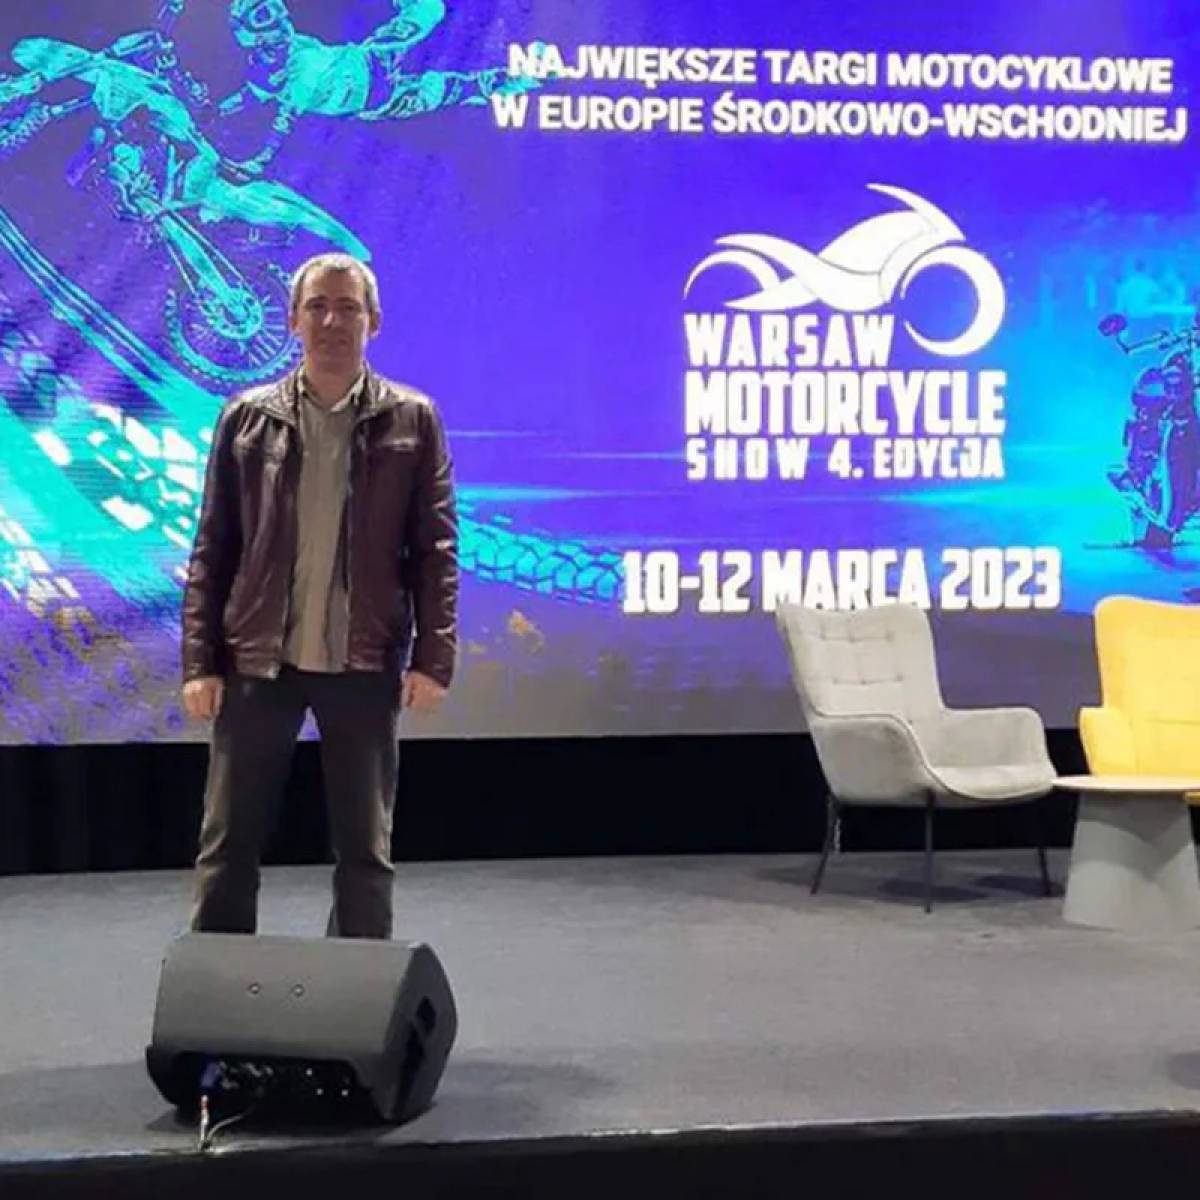 Motorcycle exhibition in Warsaw by Yuriy Gerasimchuk